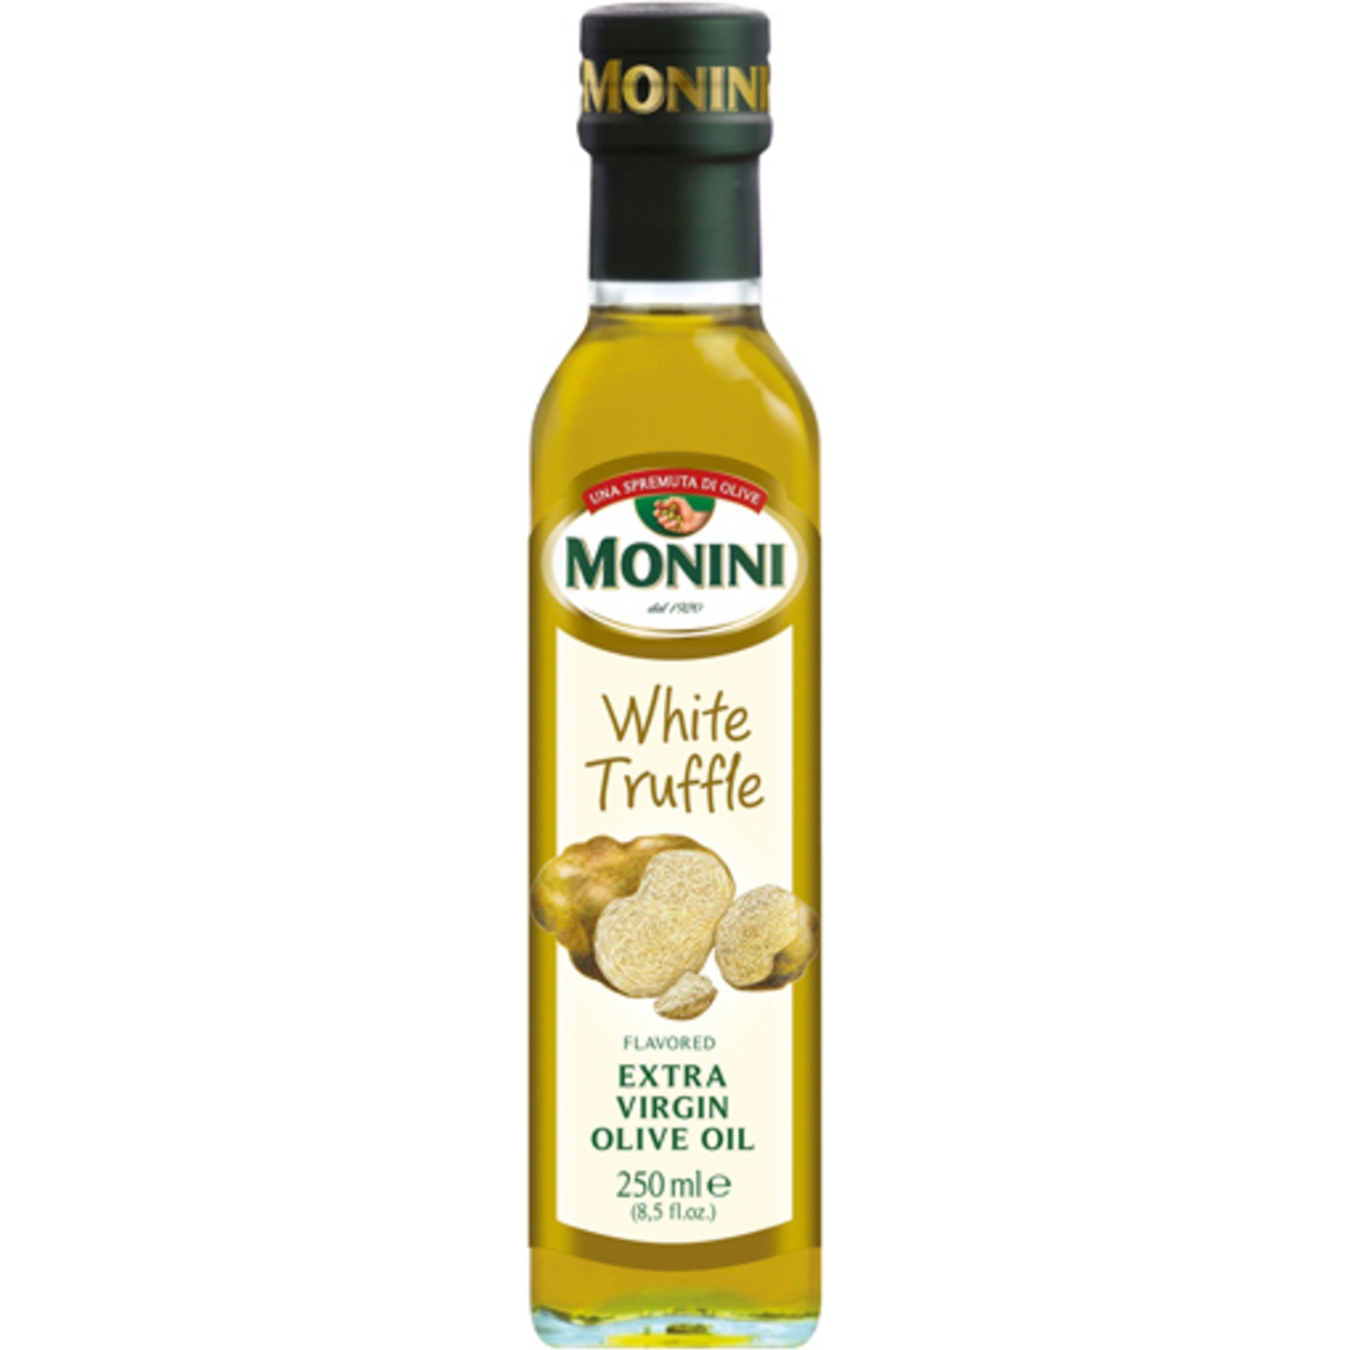 Monini White Truffle Extra Virgin Olive Oil 250ml glass